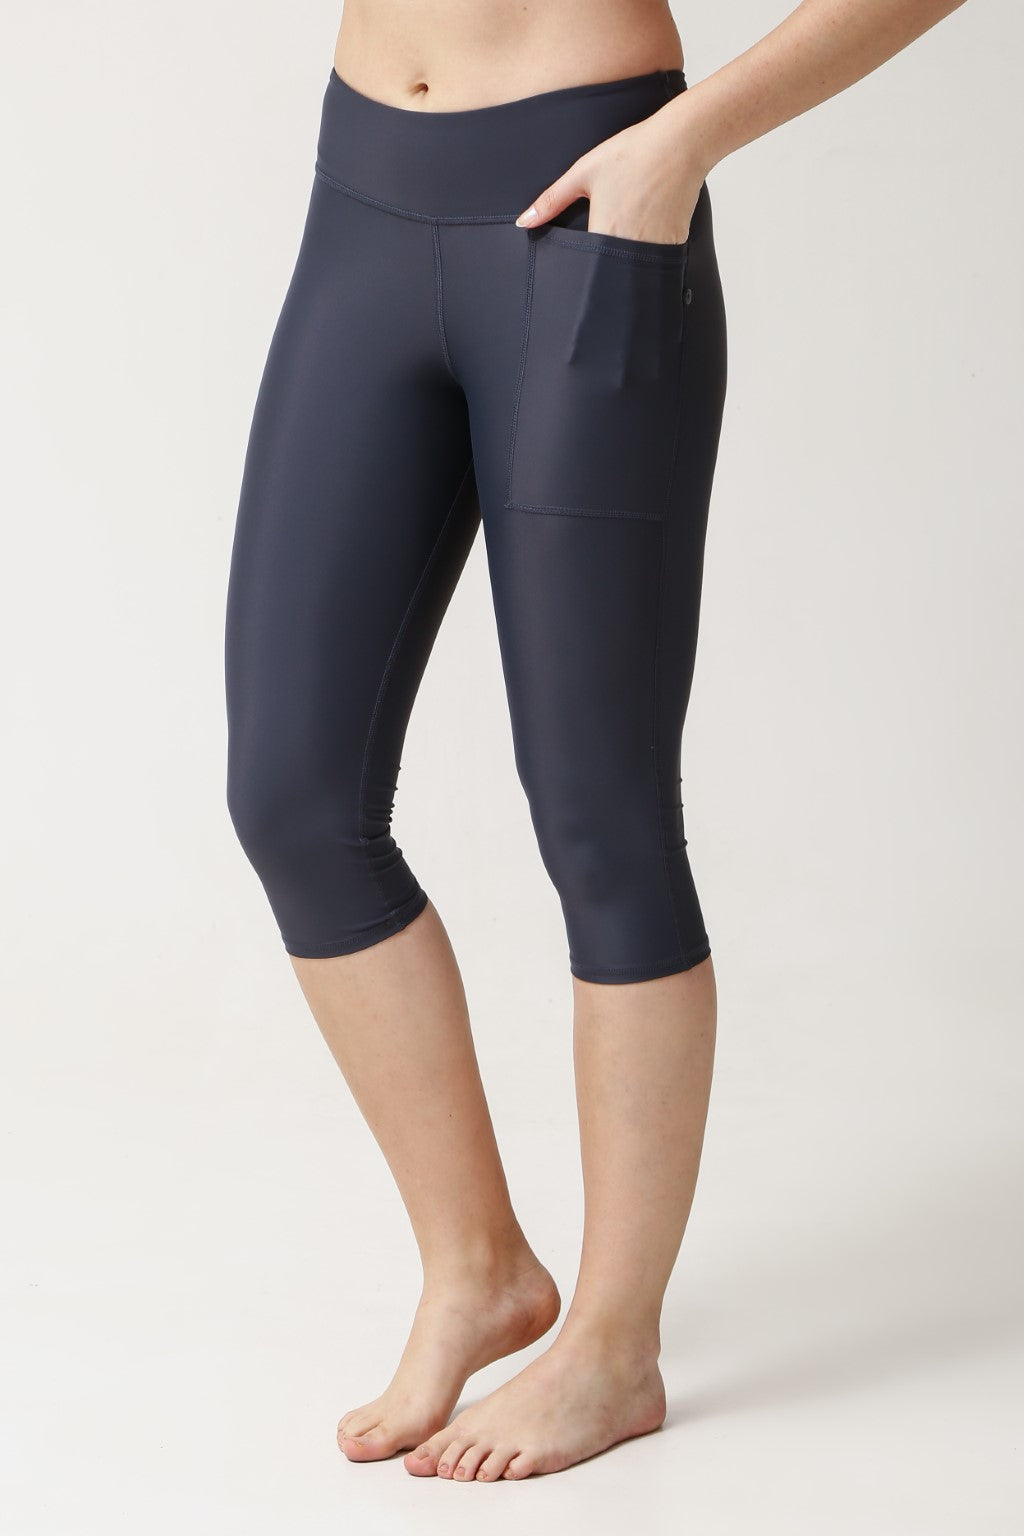 Lanuuk Capri Swim Tights - Shadow | Cropped Shorts Swimming Leggings Modest Swimwear Burkini